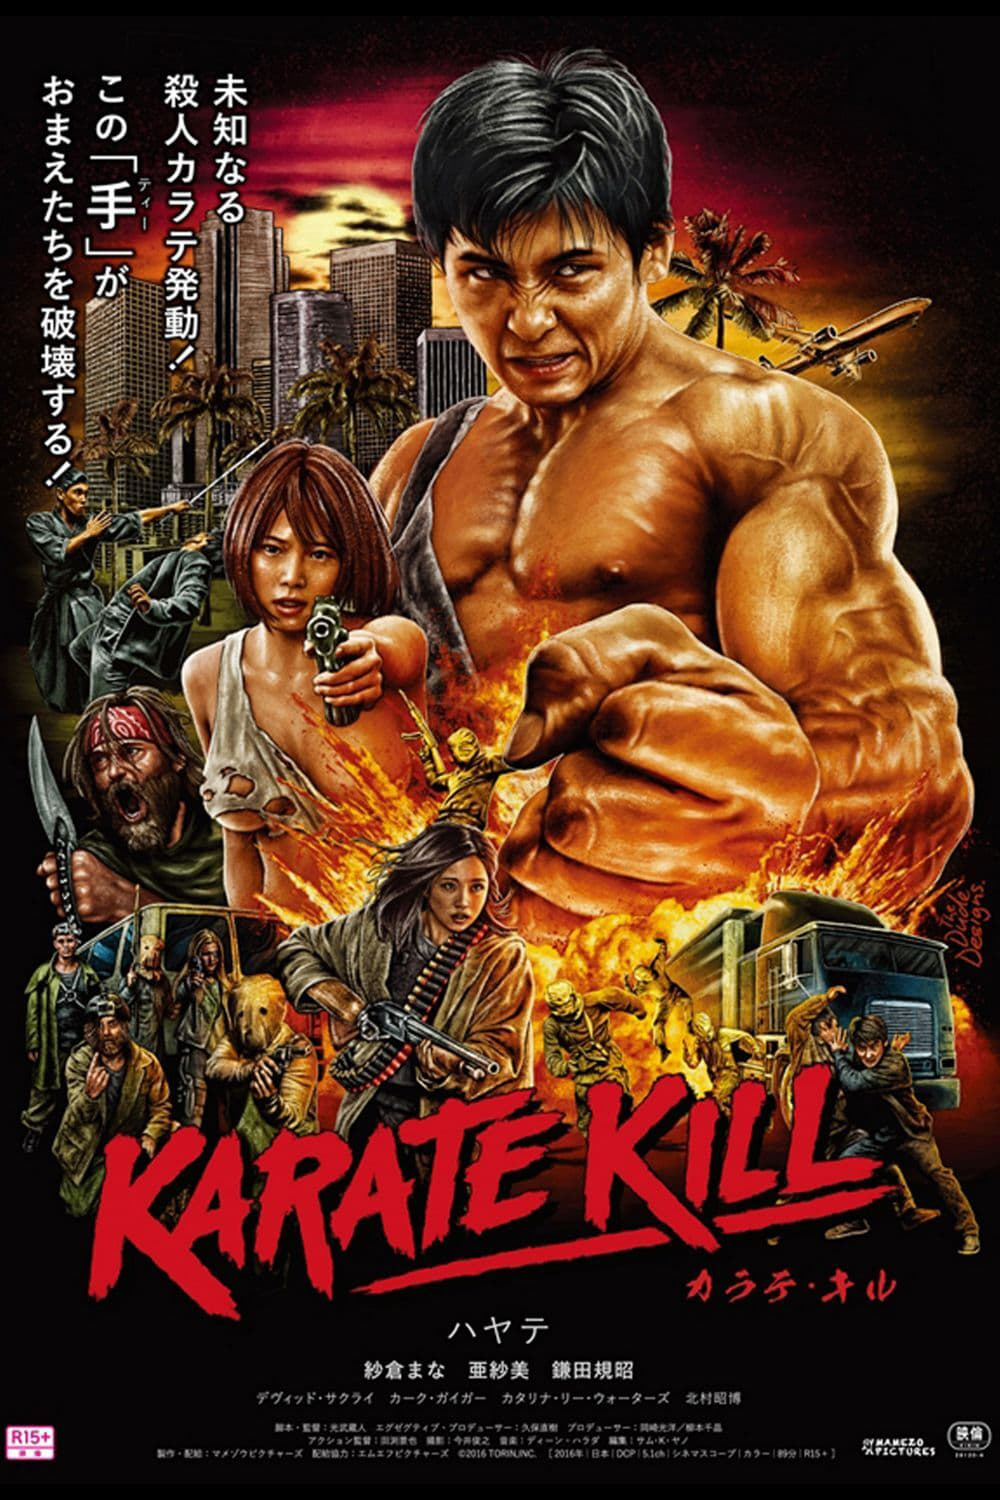 Sát Quyền (Karate Kill) [2016]